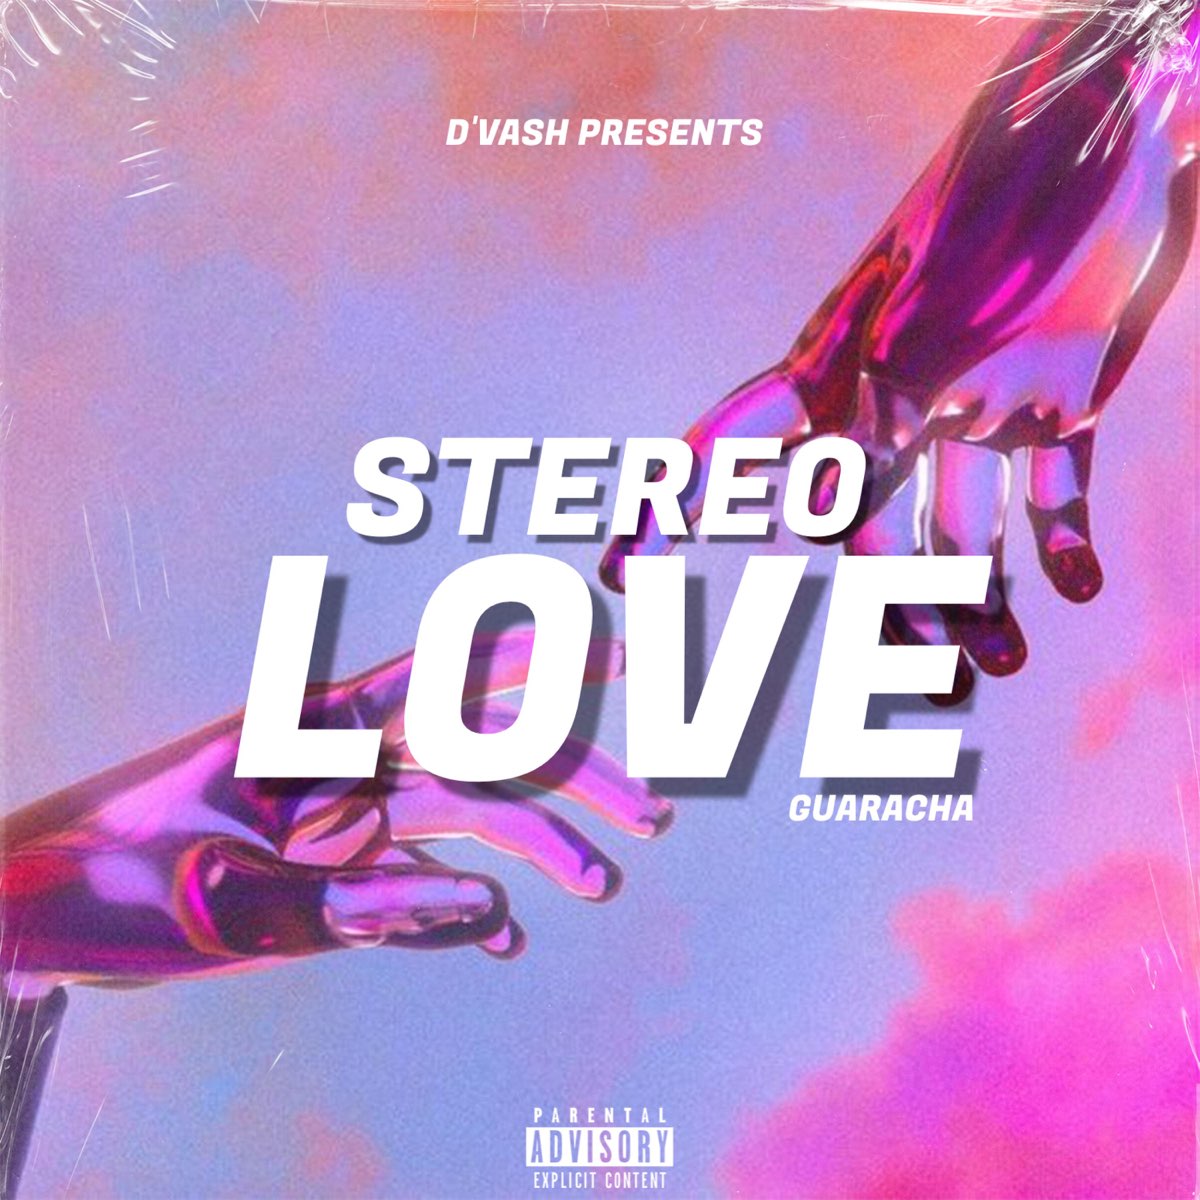 Stereo love edward remix. Stereo Love. Edward Maya stereo Love. Stereo Love ФОНК. Переводить stereo Love.